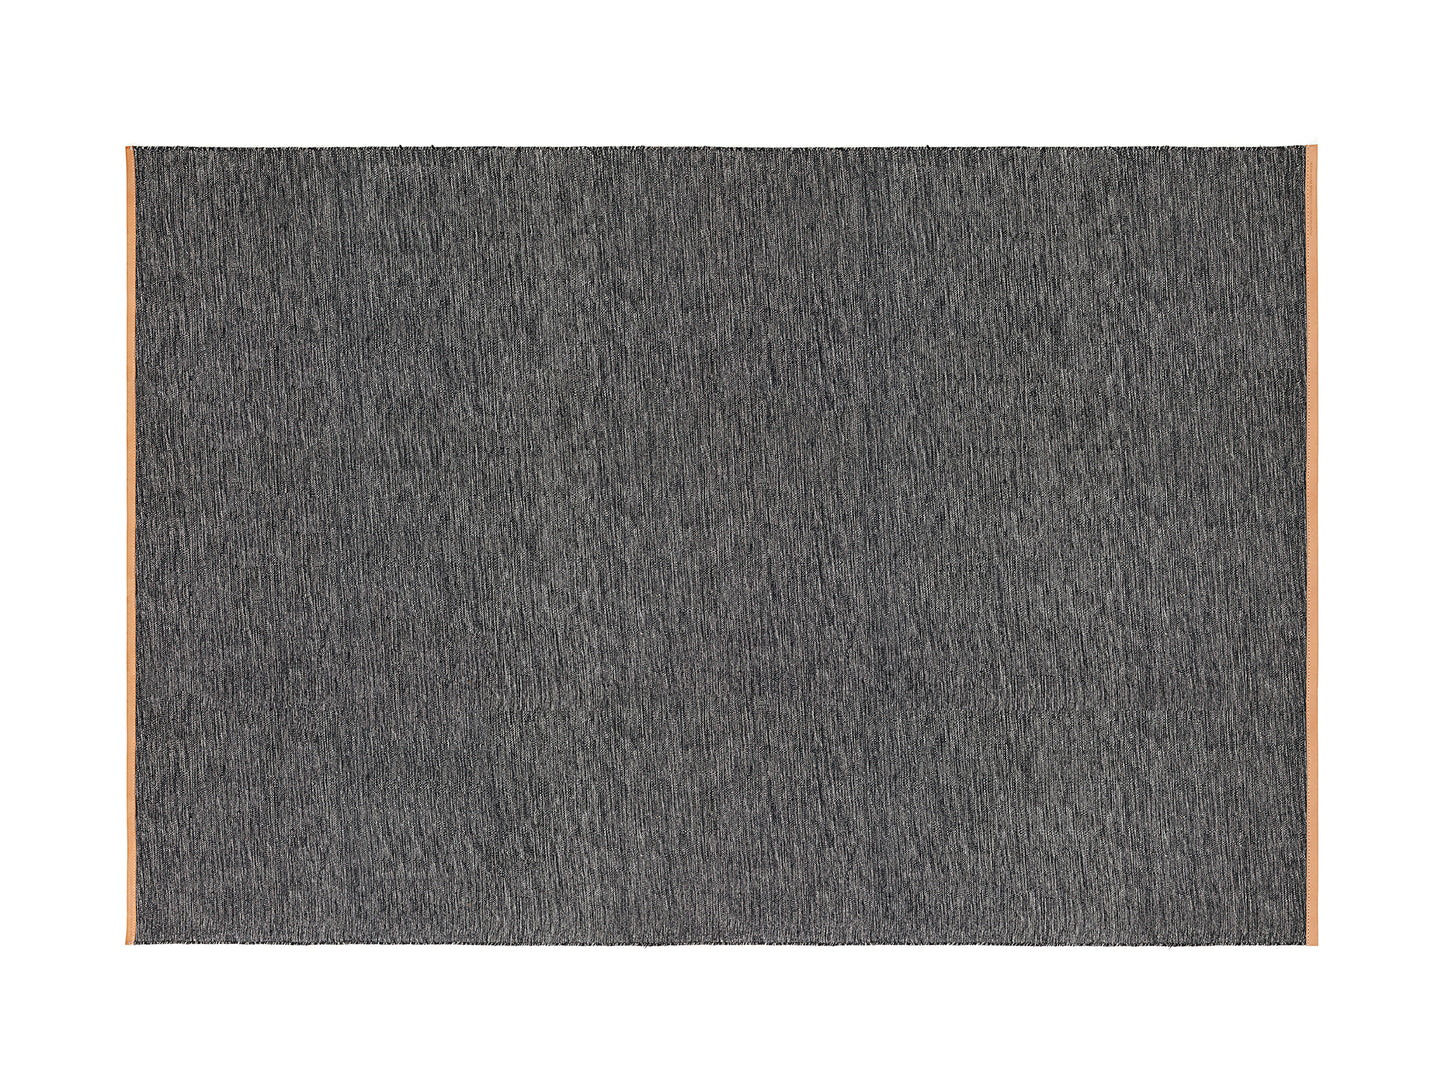 Bjork Rug by Design House Stockholm - X-Large (200x300) / Dark Grey